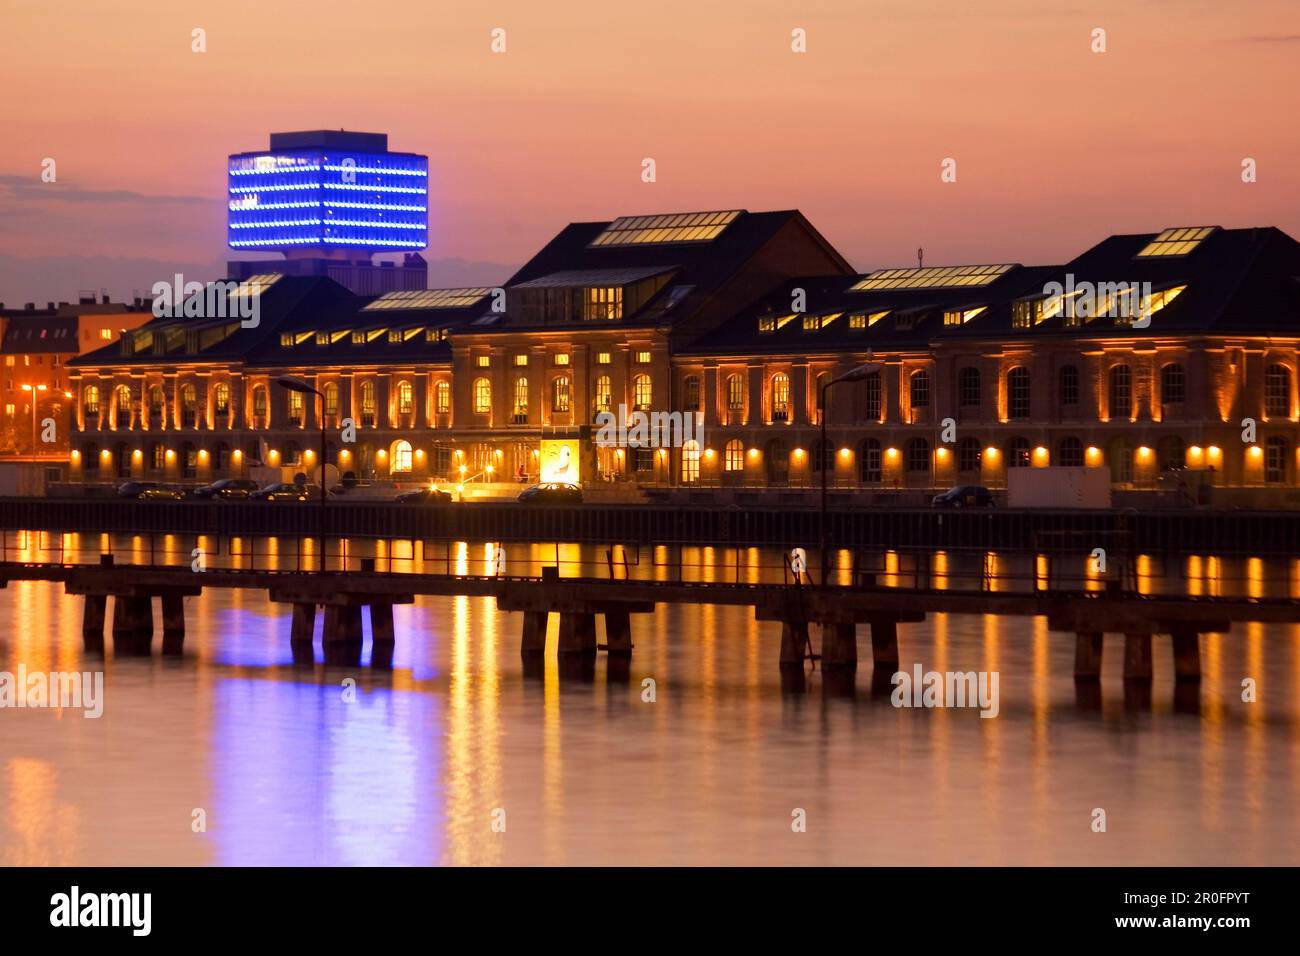 Berlin former east harbour, river spree , MTV studios, background Oberbaum city skyscaper illuminated Stock Photo